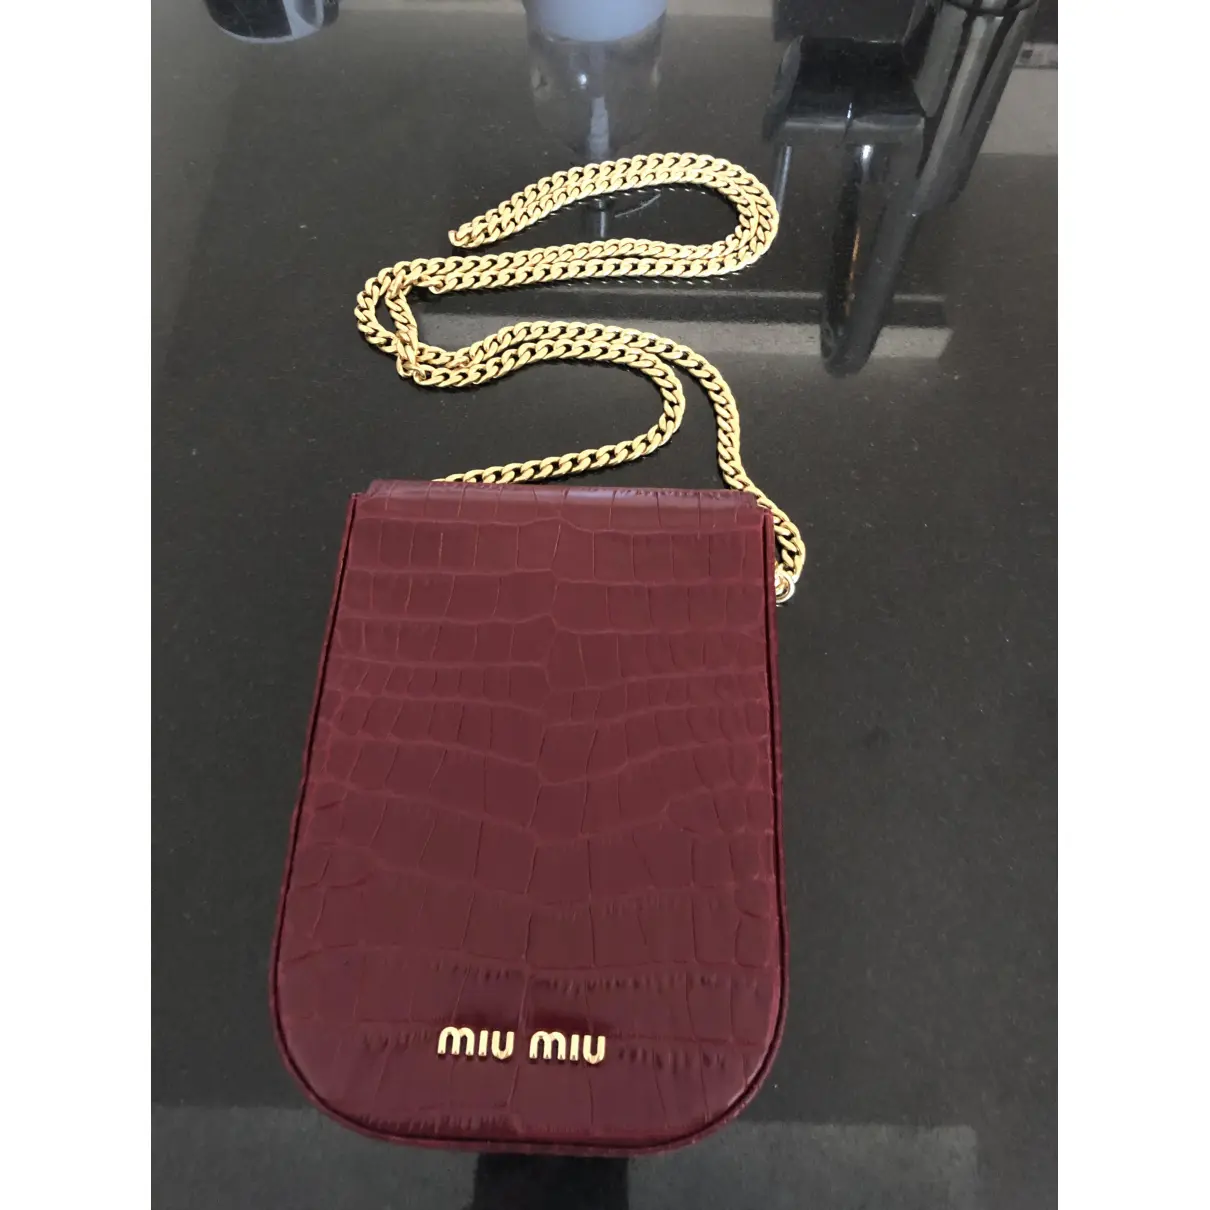 Buy Miu Miu Leather crossbody bag online